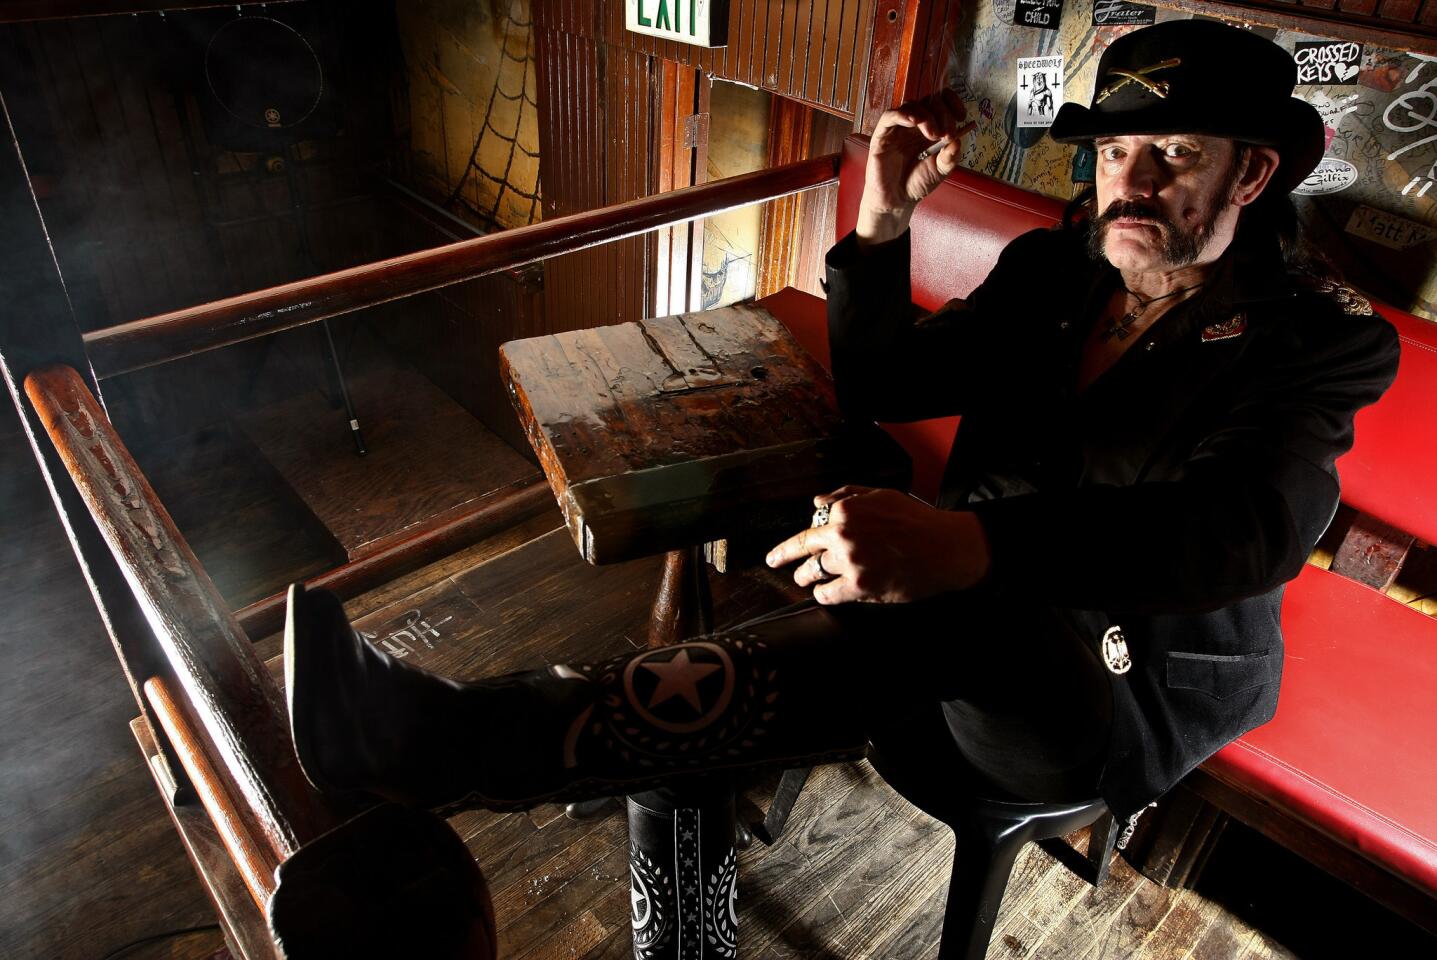 Motorhead guitarist Lemmy dies